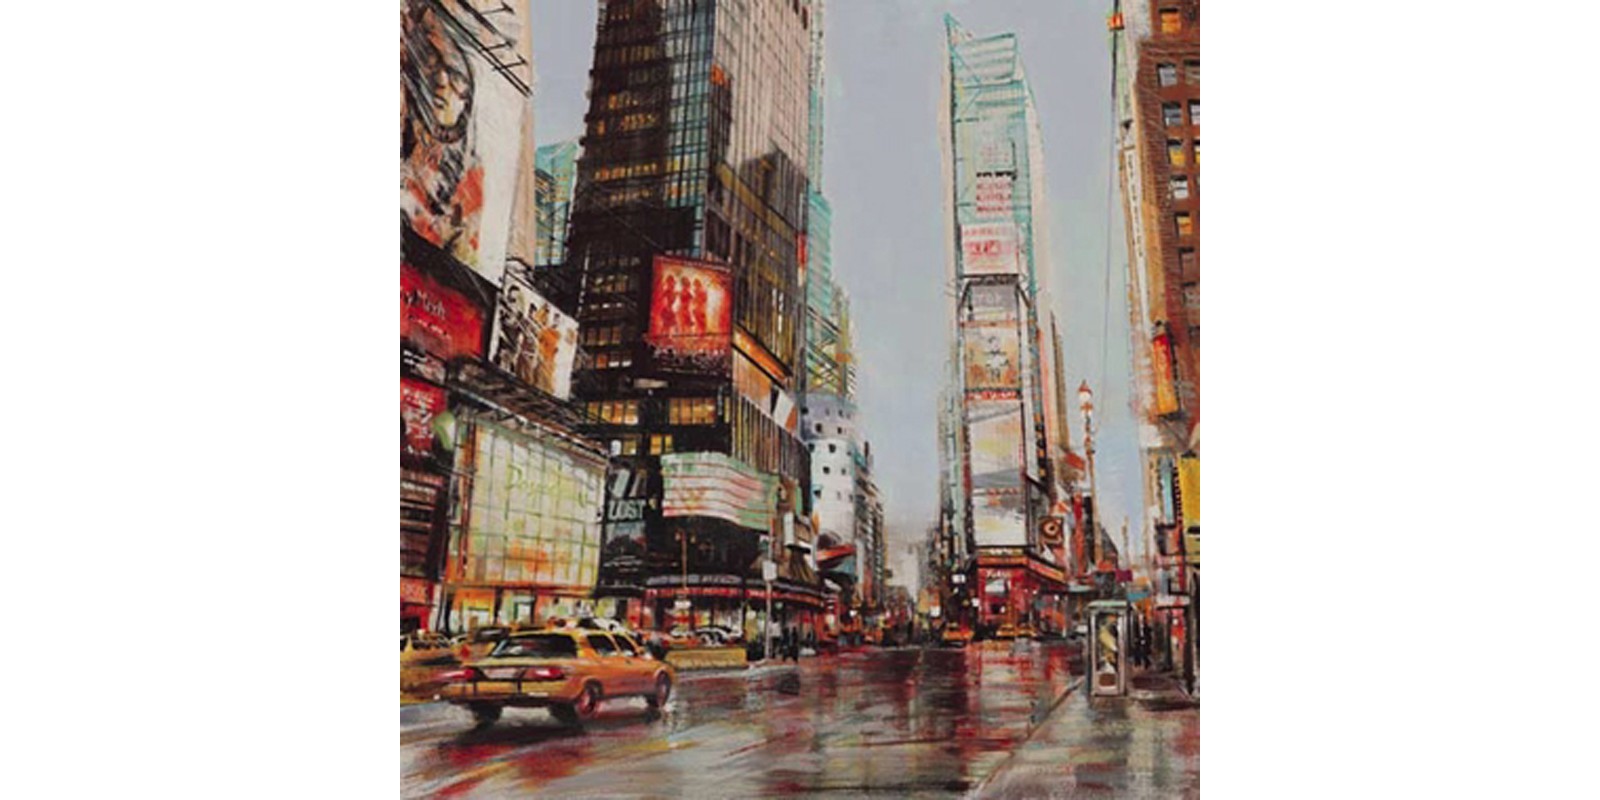 John B. Mannarini - Taxi in Times Square